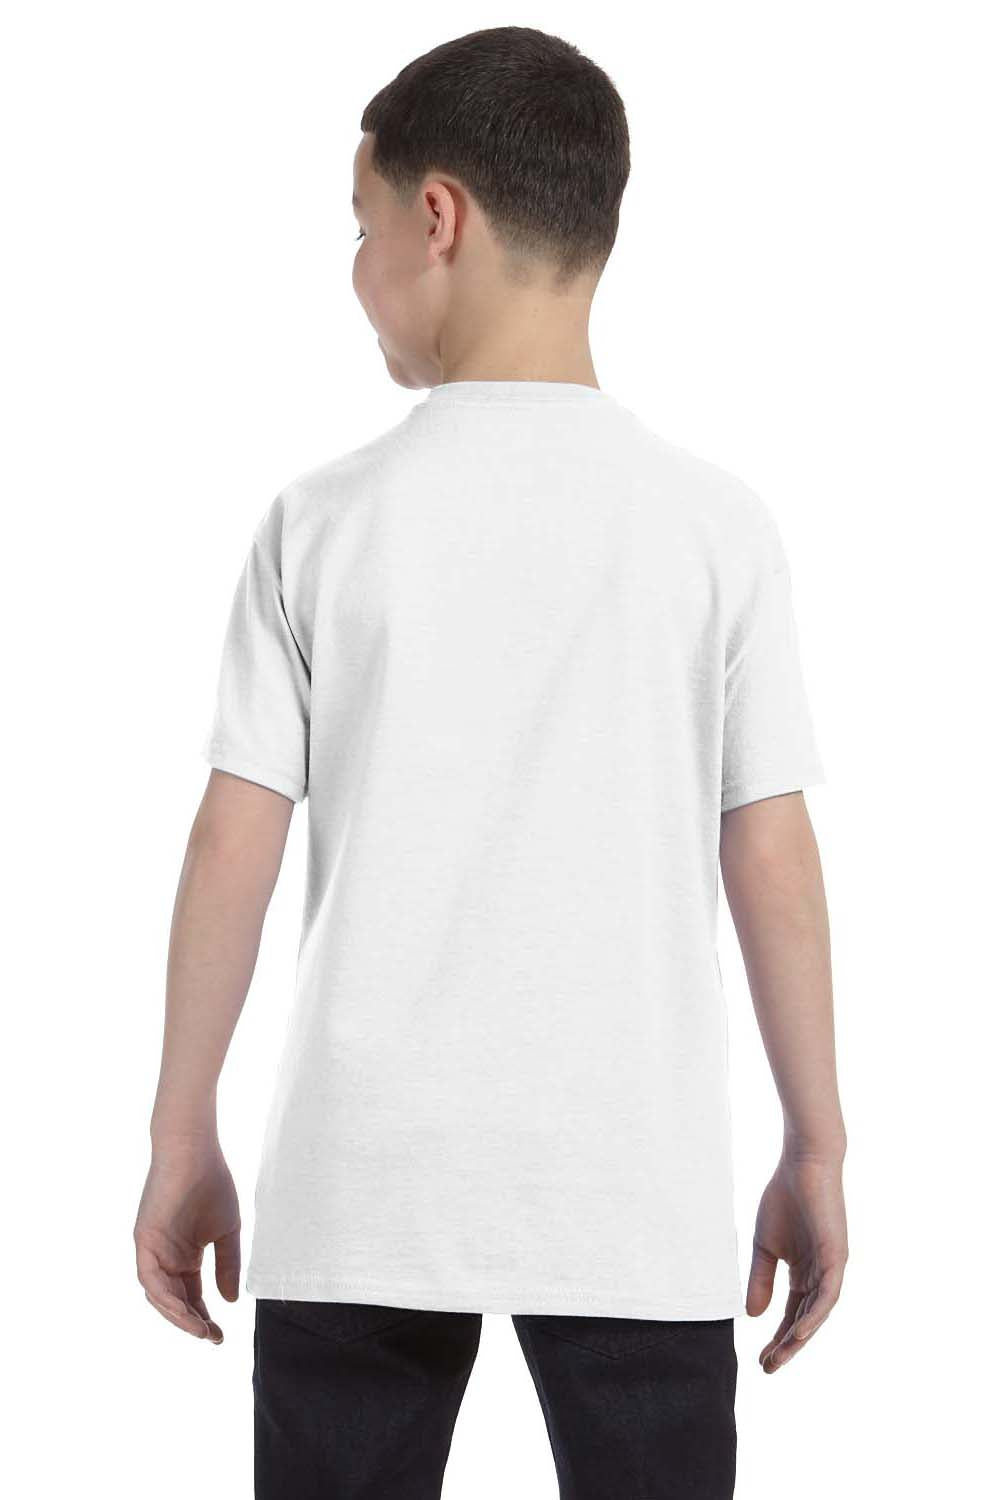 Gildan G500B Youth Short Sleeve Crewneck T-Shirt White Back